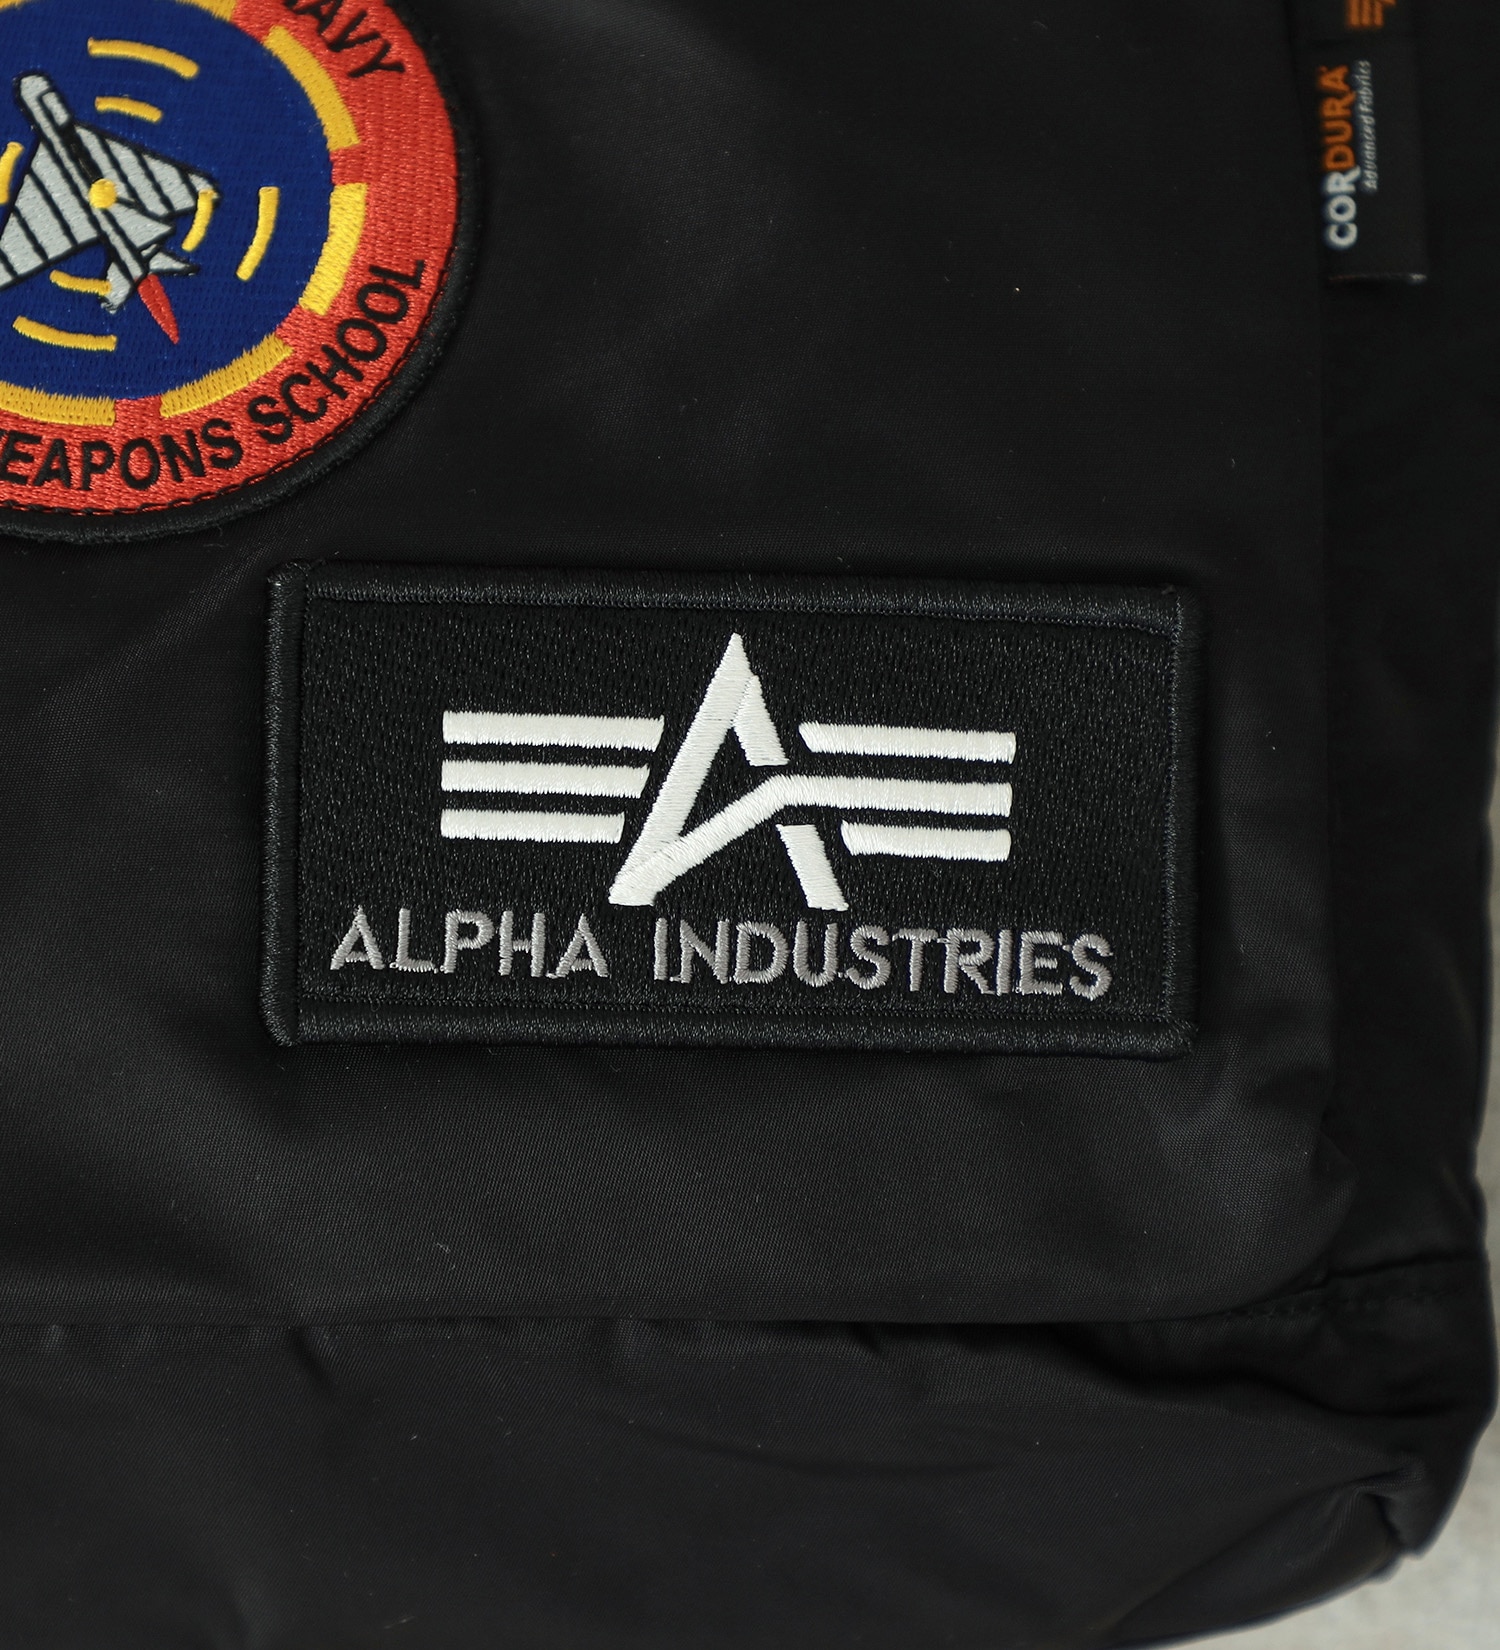 ALPHA(アルファ)のパッチド2WAYヘルメットバッグ コーデュラ|バッグ/エコバッグ/サブバッグ/メンズ|ブラック